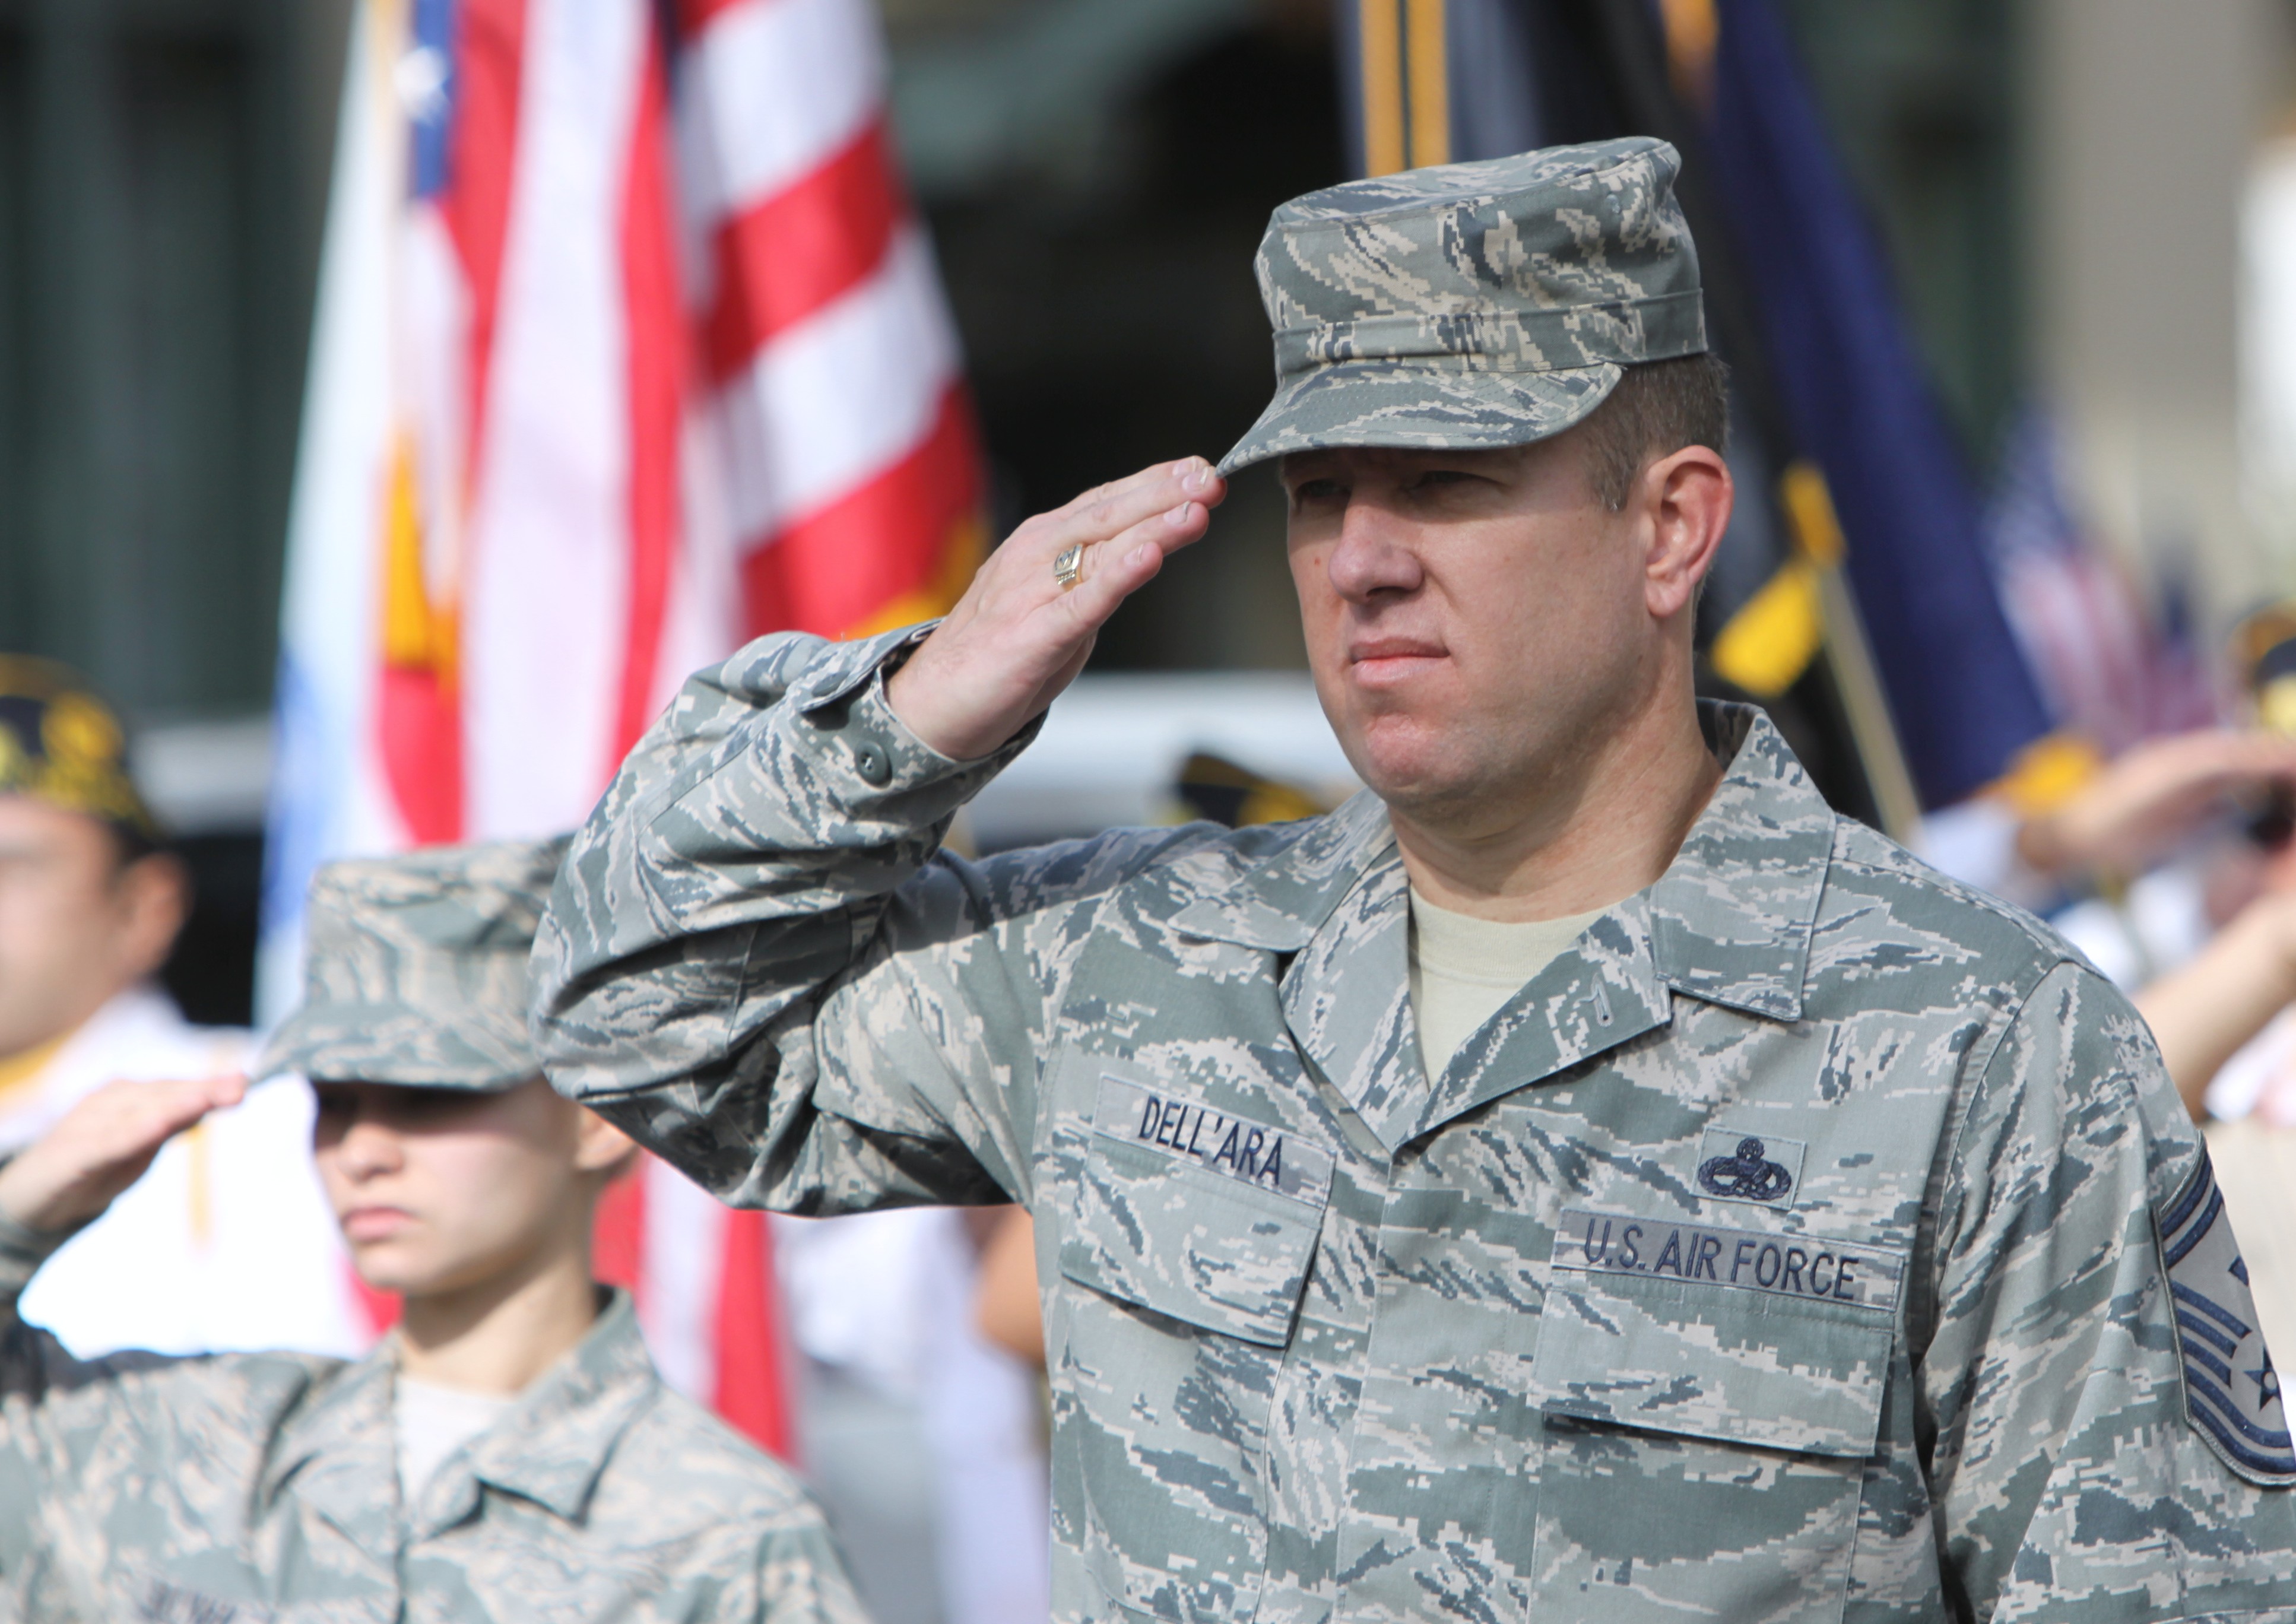 First Sergeant Dell'ara salutes Yuba Sutter Veterans Day Parade